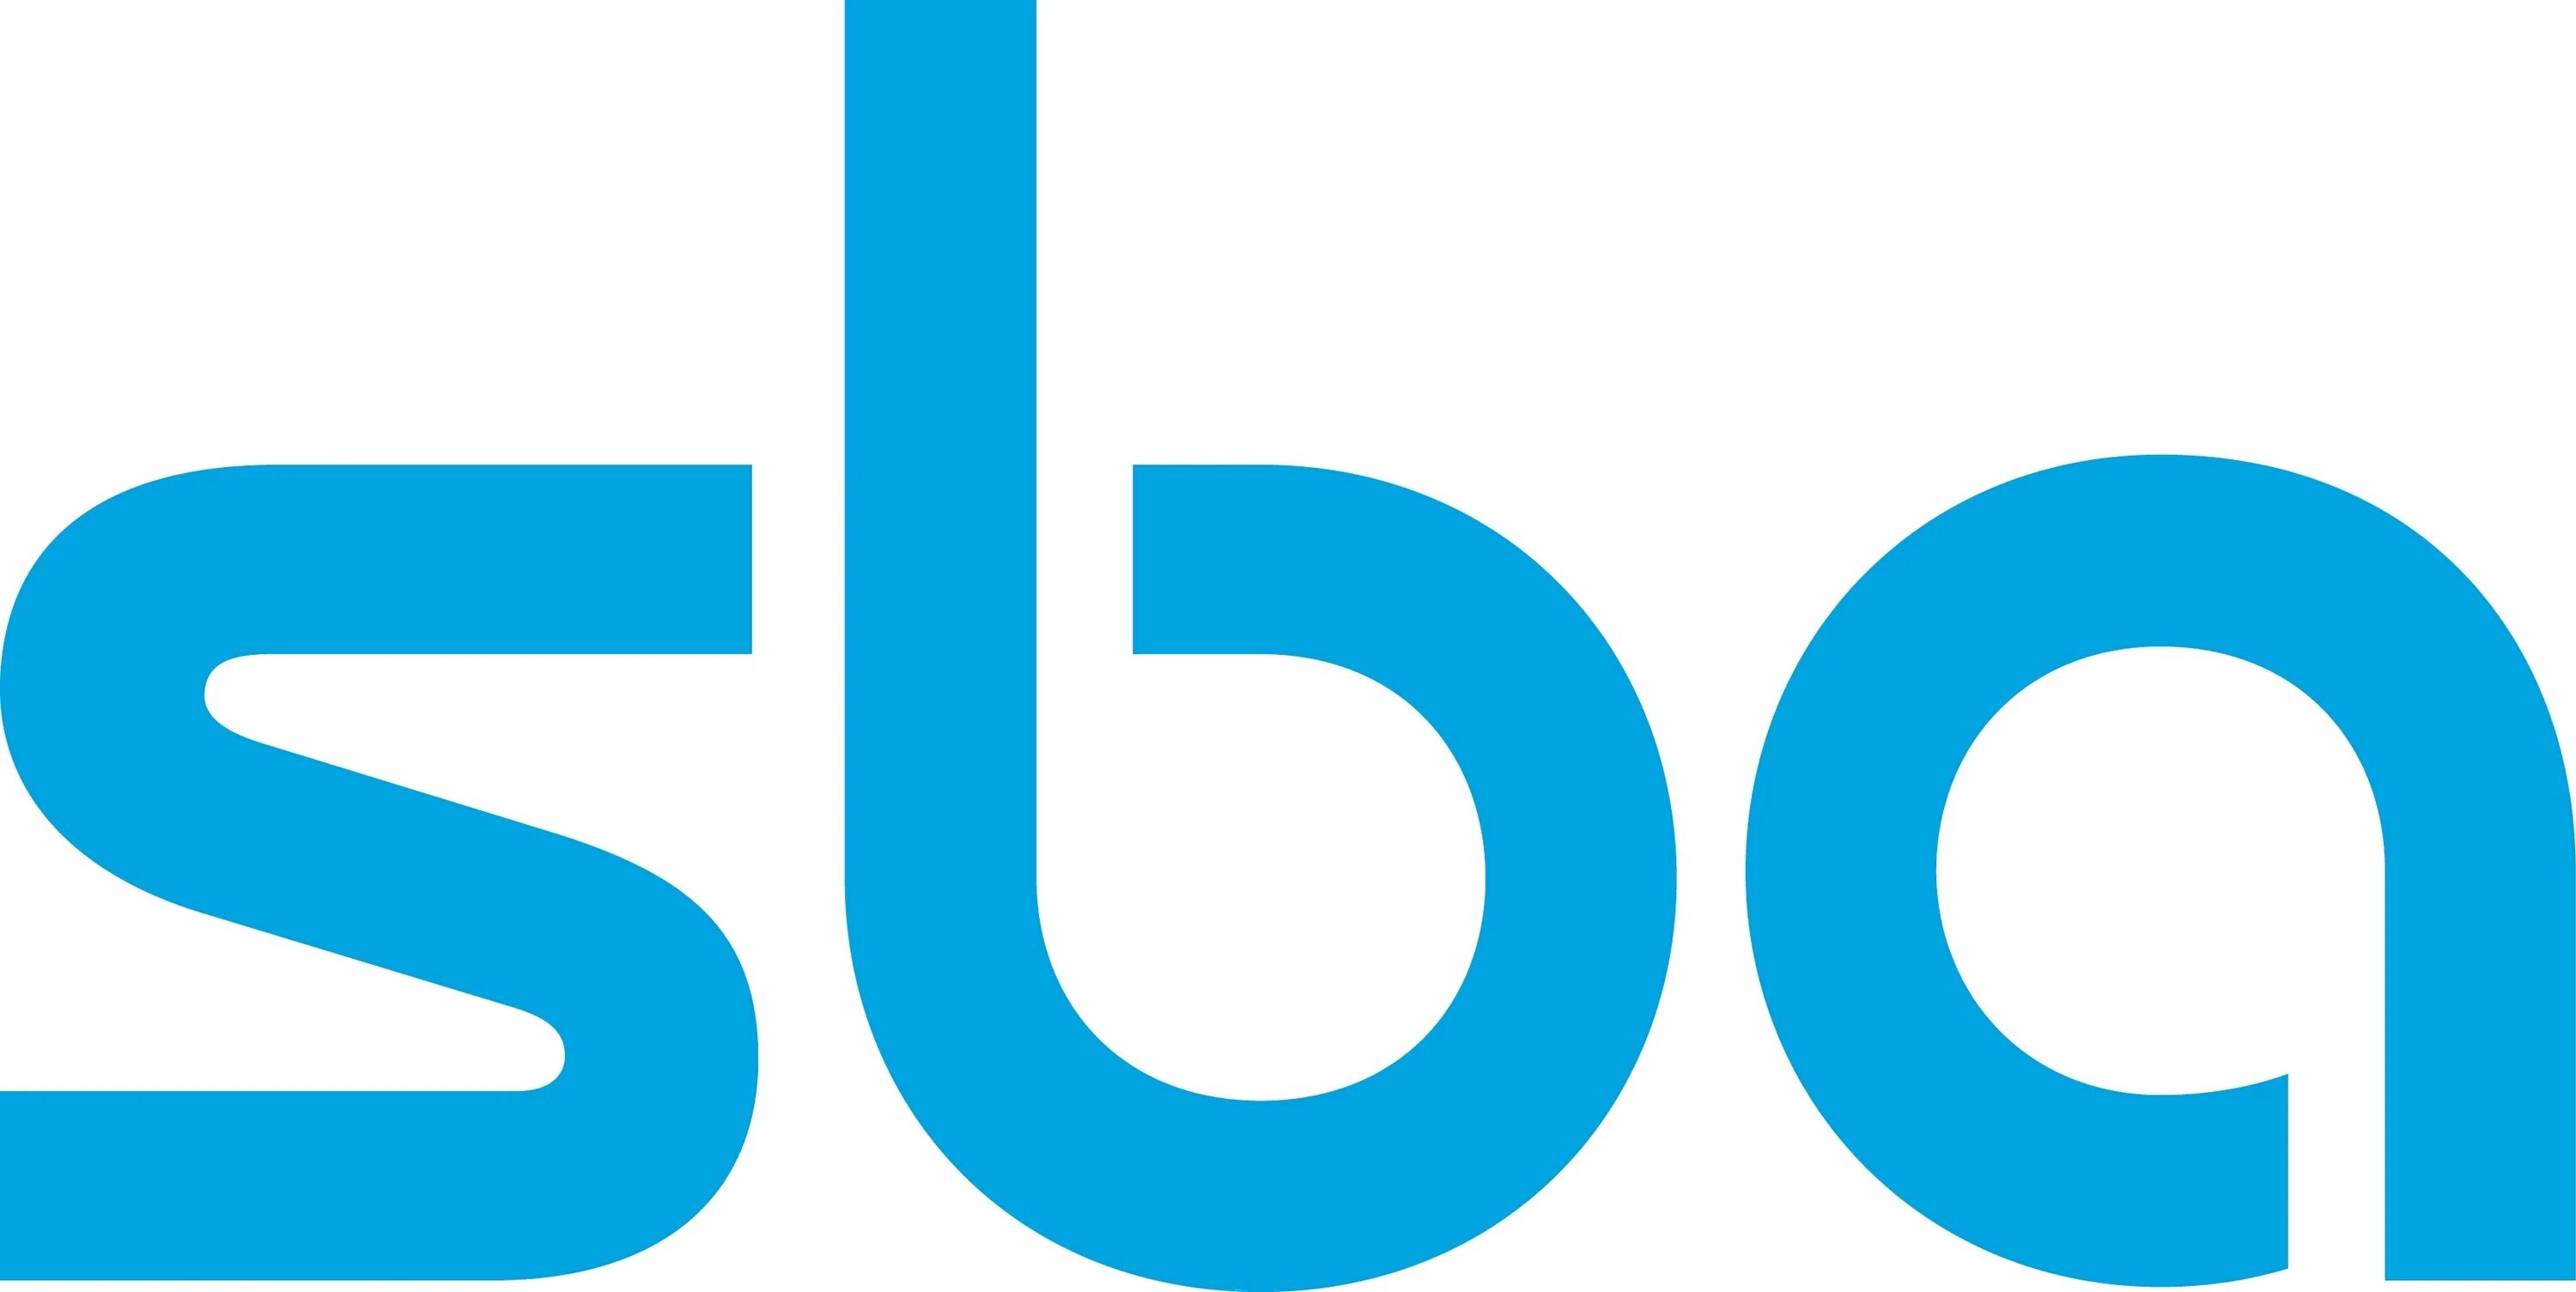 SBA. Seoul логотип компании. BSS картинка. GAC лого. Int content